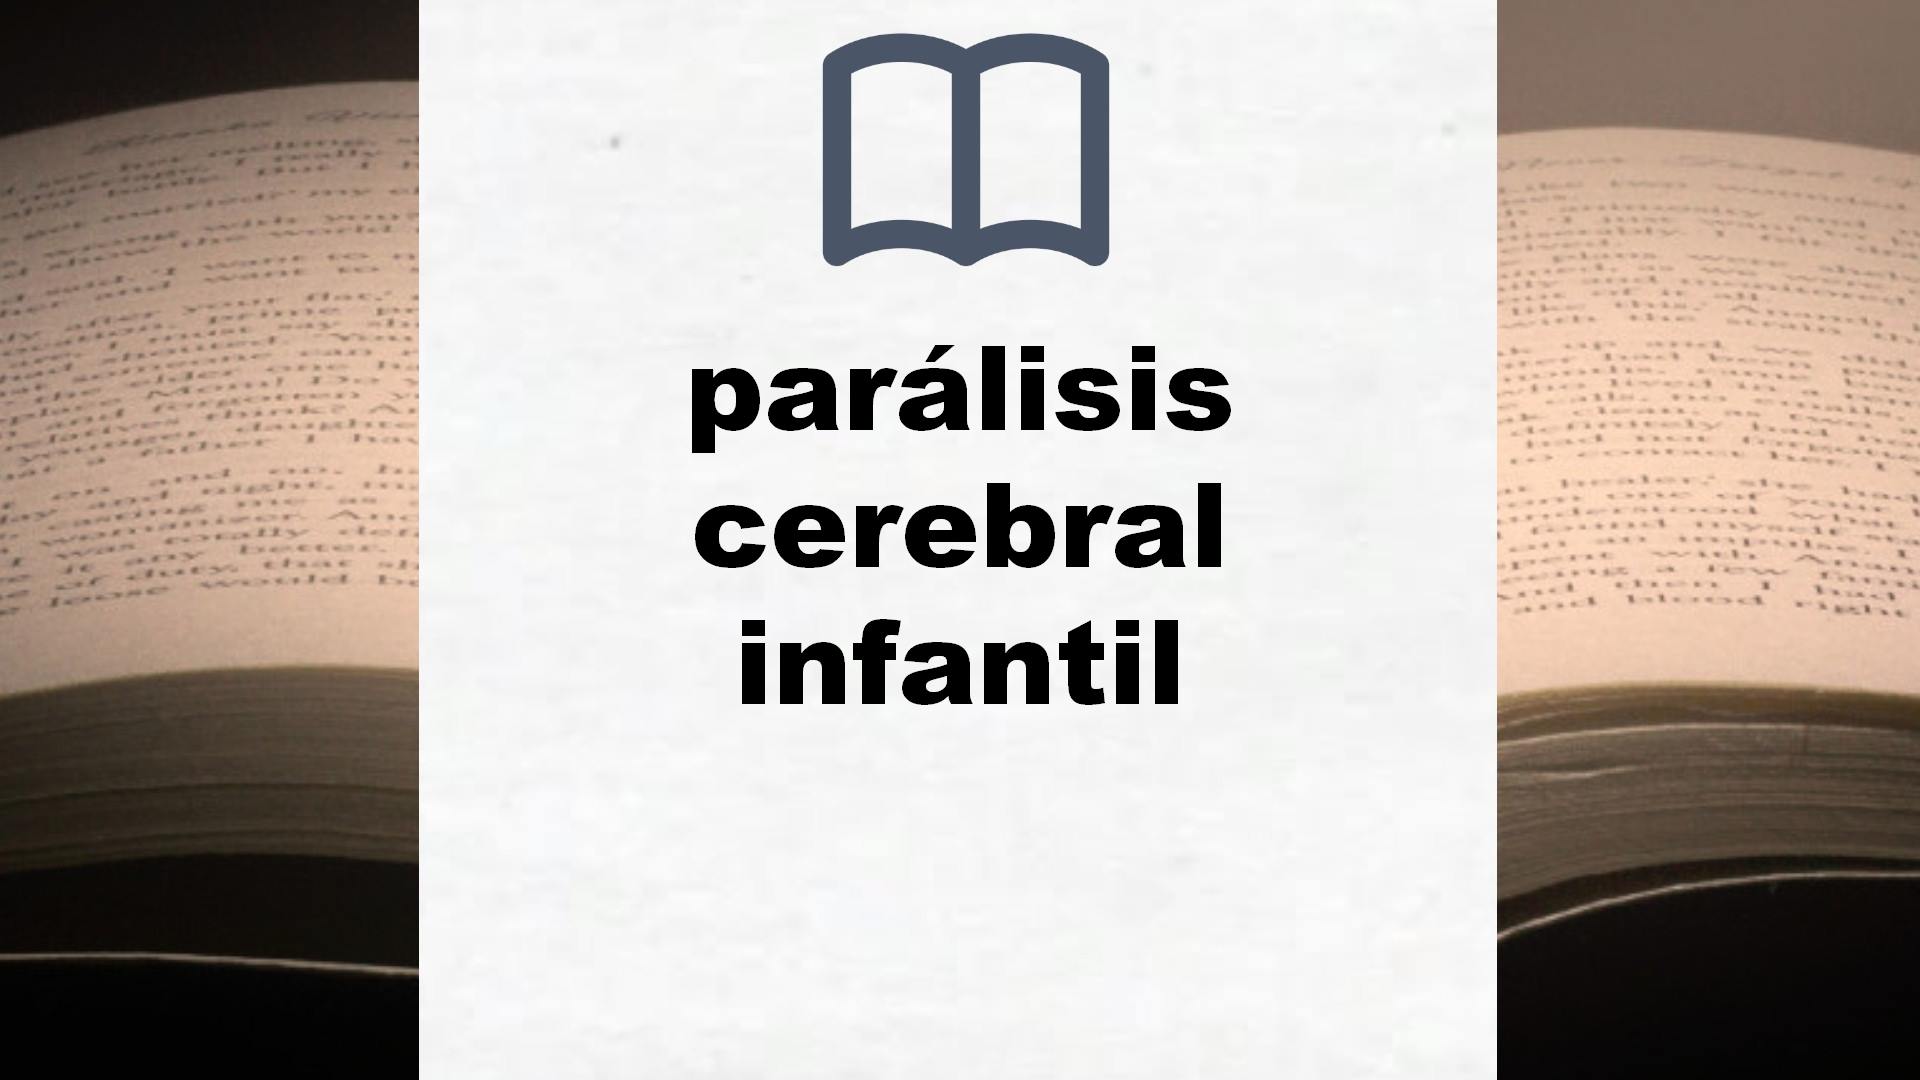 Libros sobre parálisis cerebral infantil